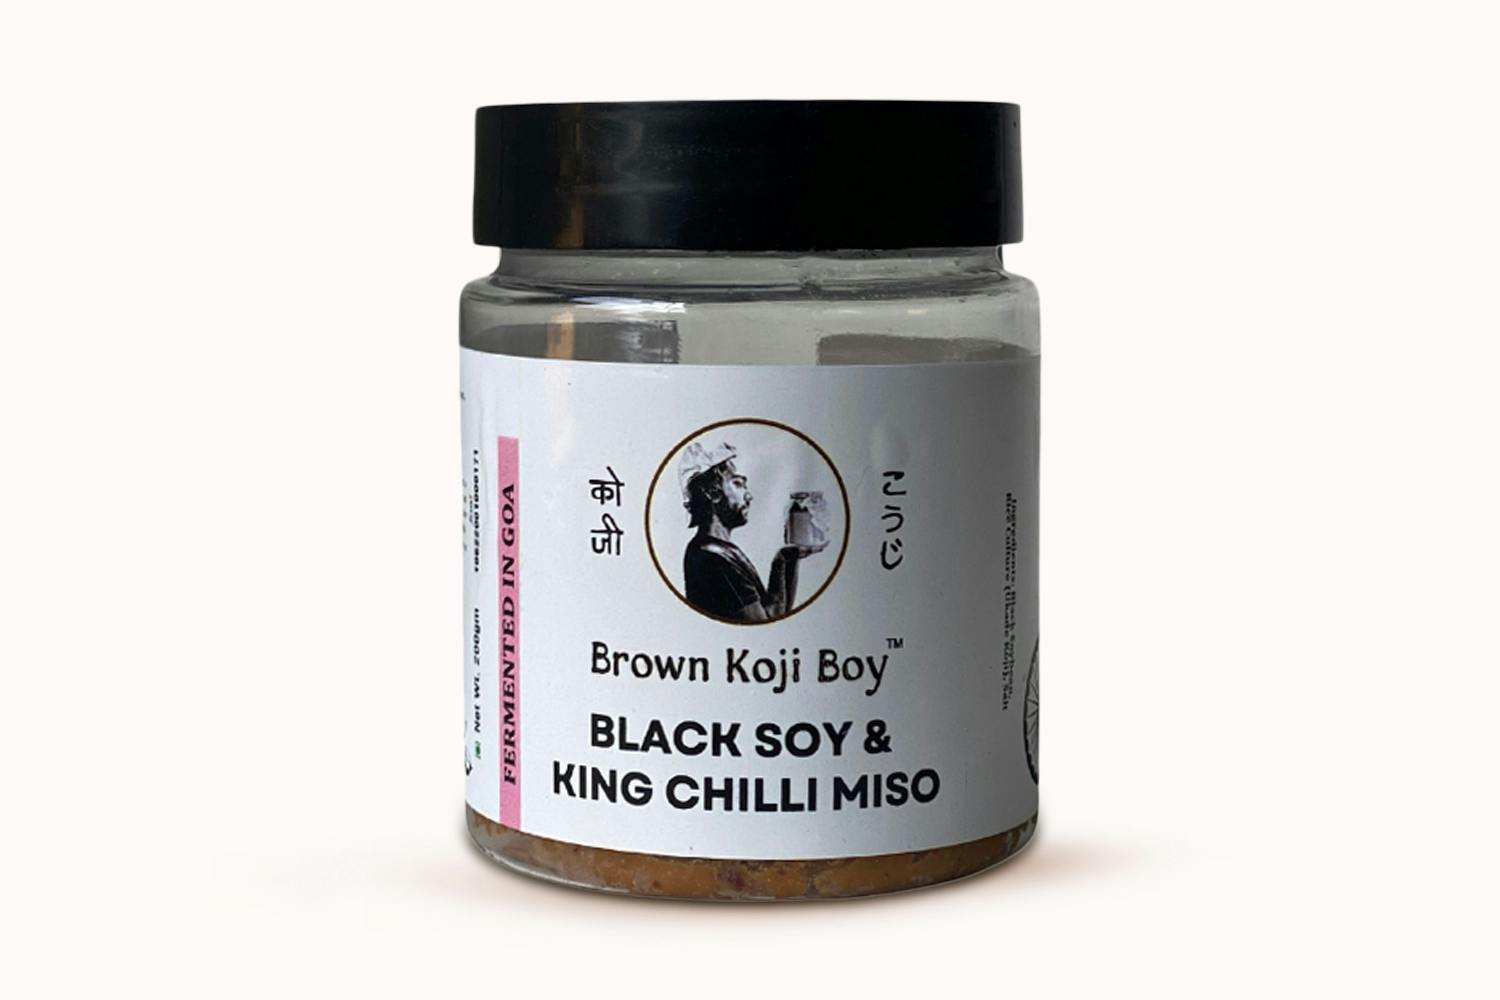 Brown Koji Boy Soy & King Chilli Miso